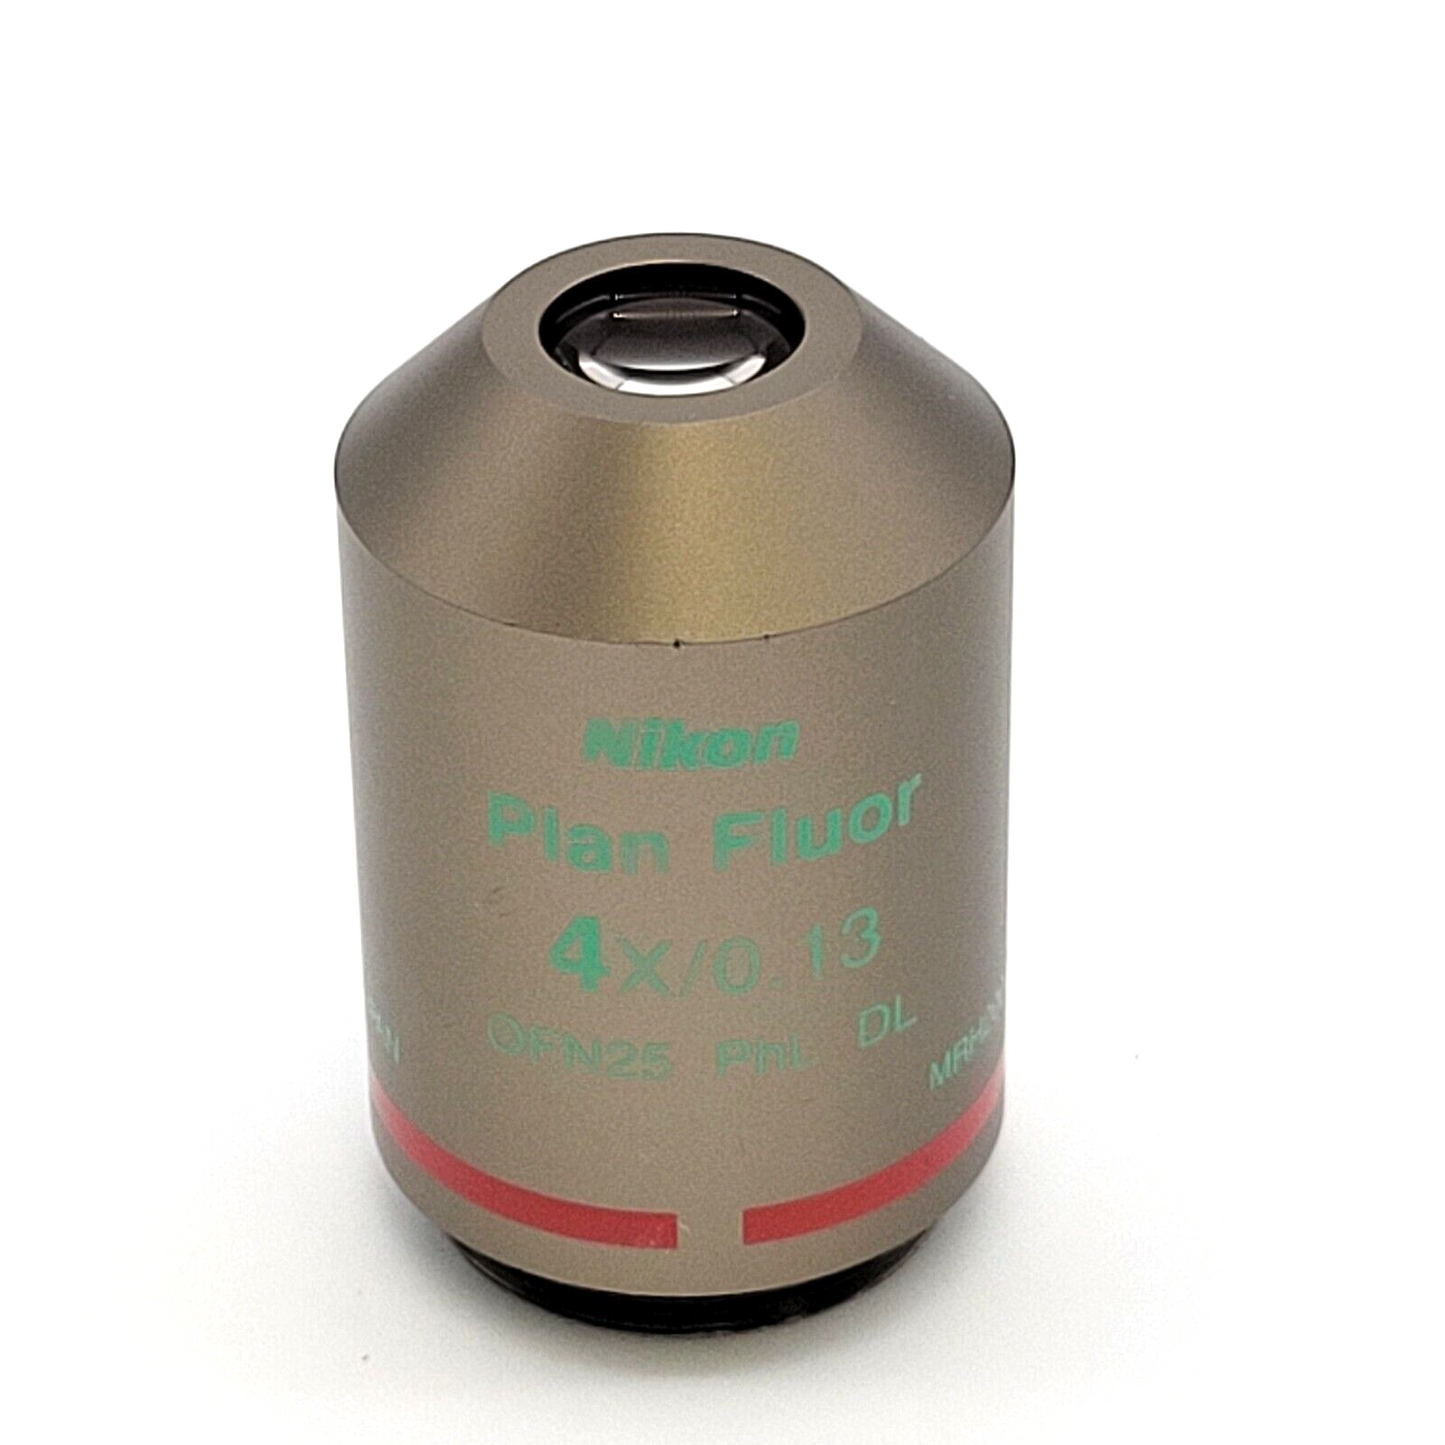 Nikon Microscope Objective CFI Plan Fluor 4x NA 0.13 PhL Phase Contrast - microscopemarketplace